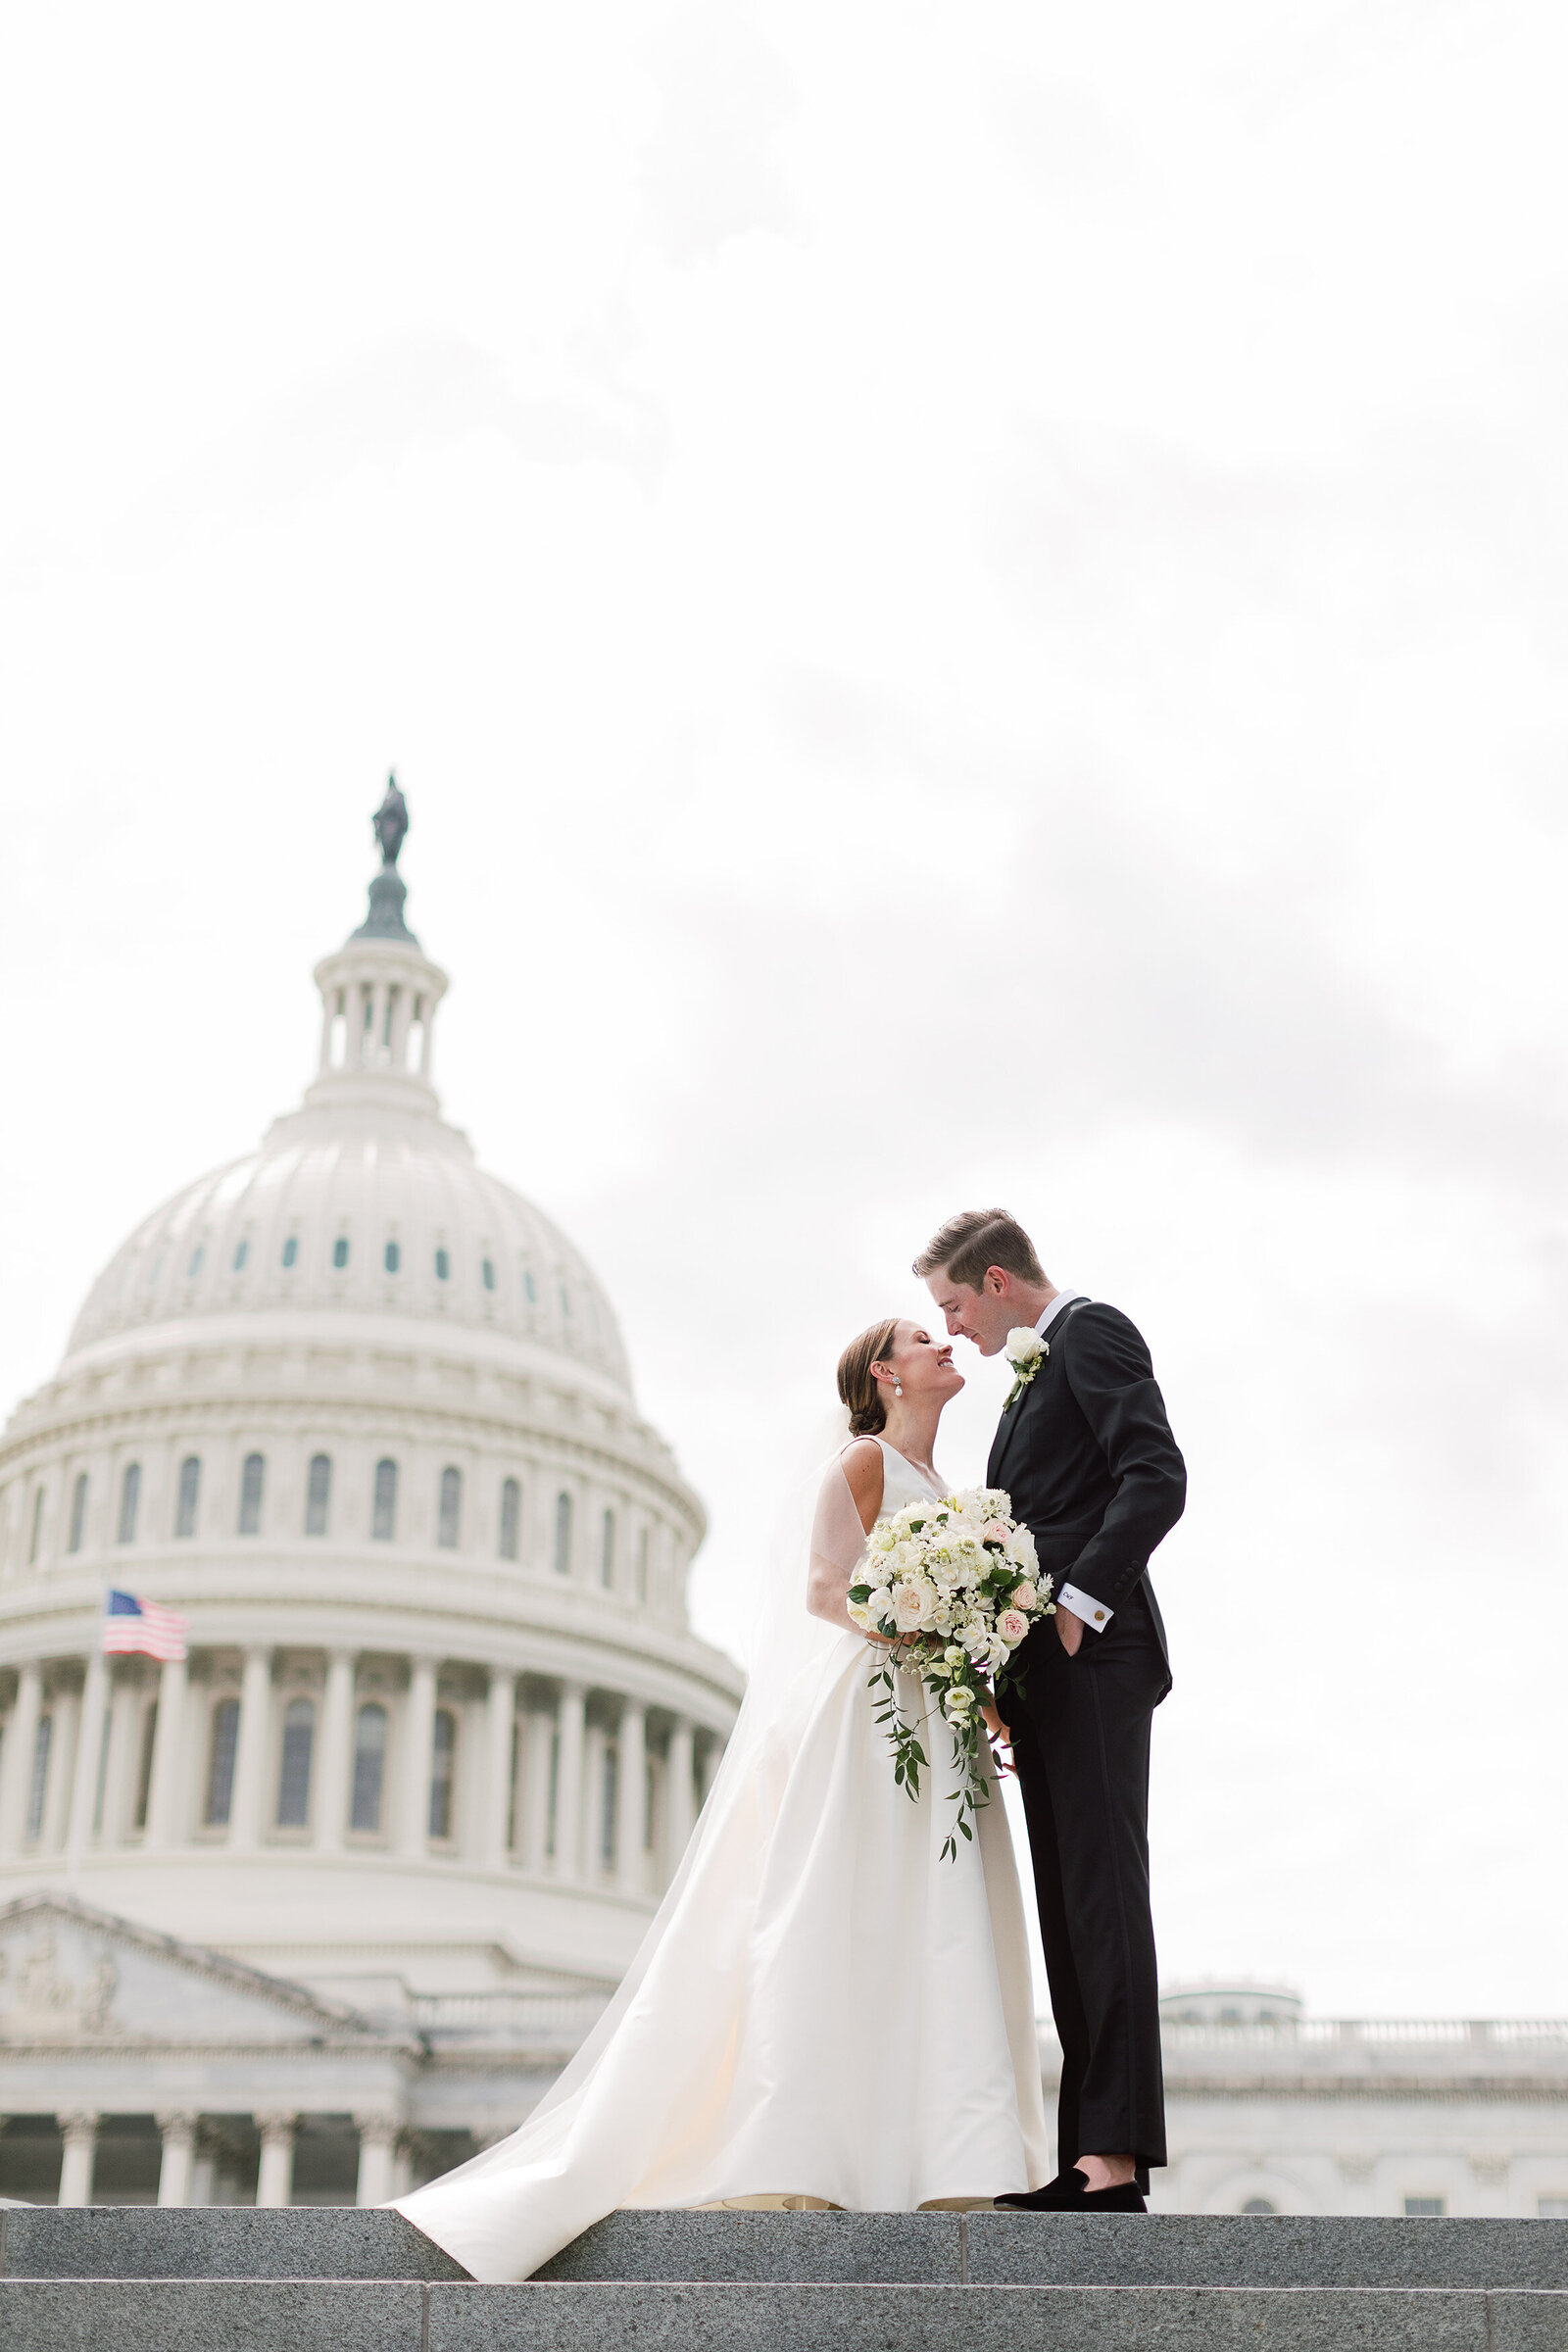 carolina herrera bride and groom United States Capitol